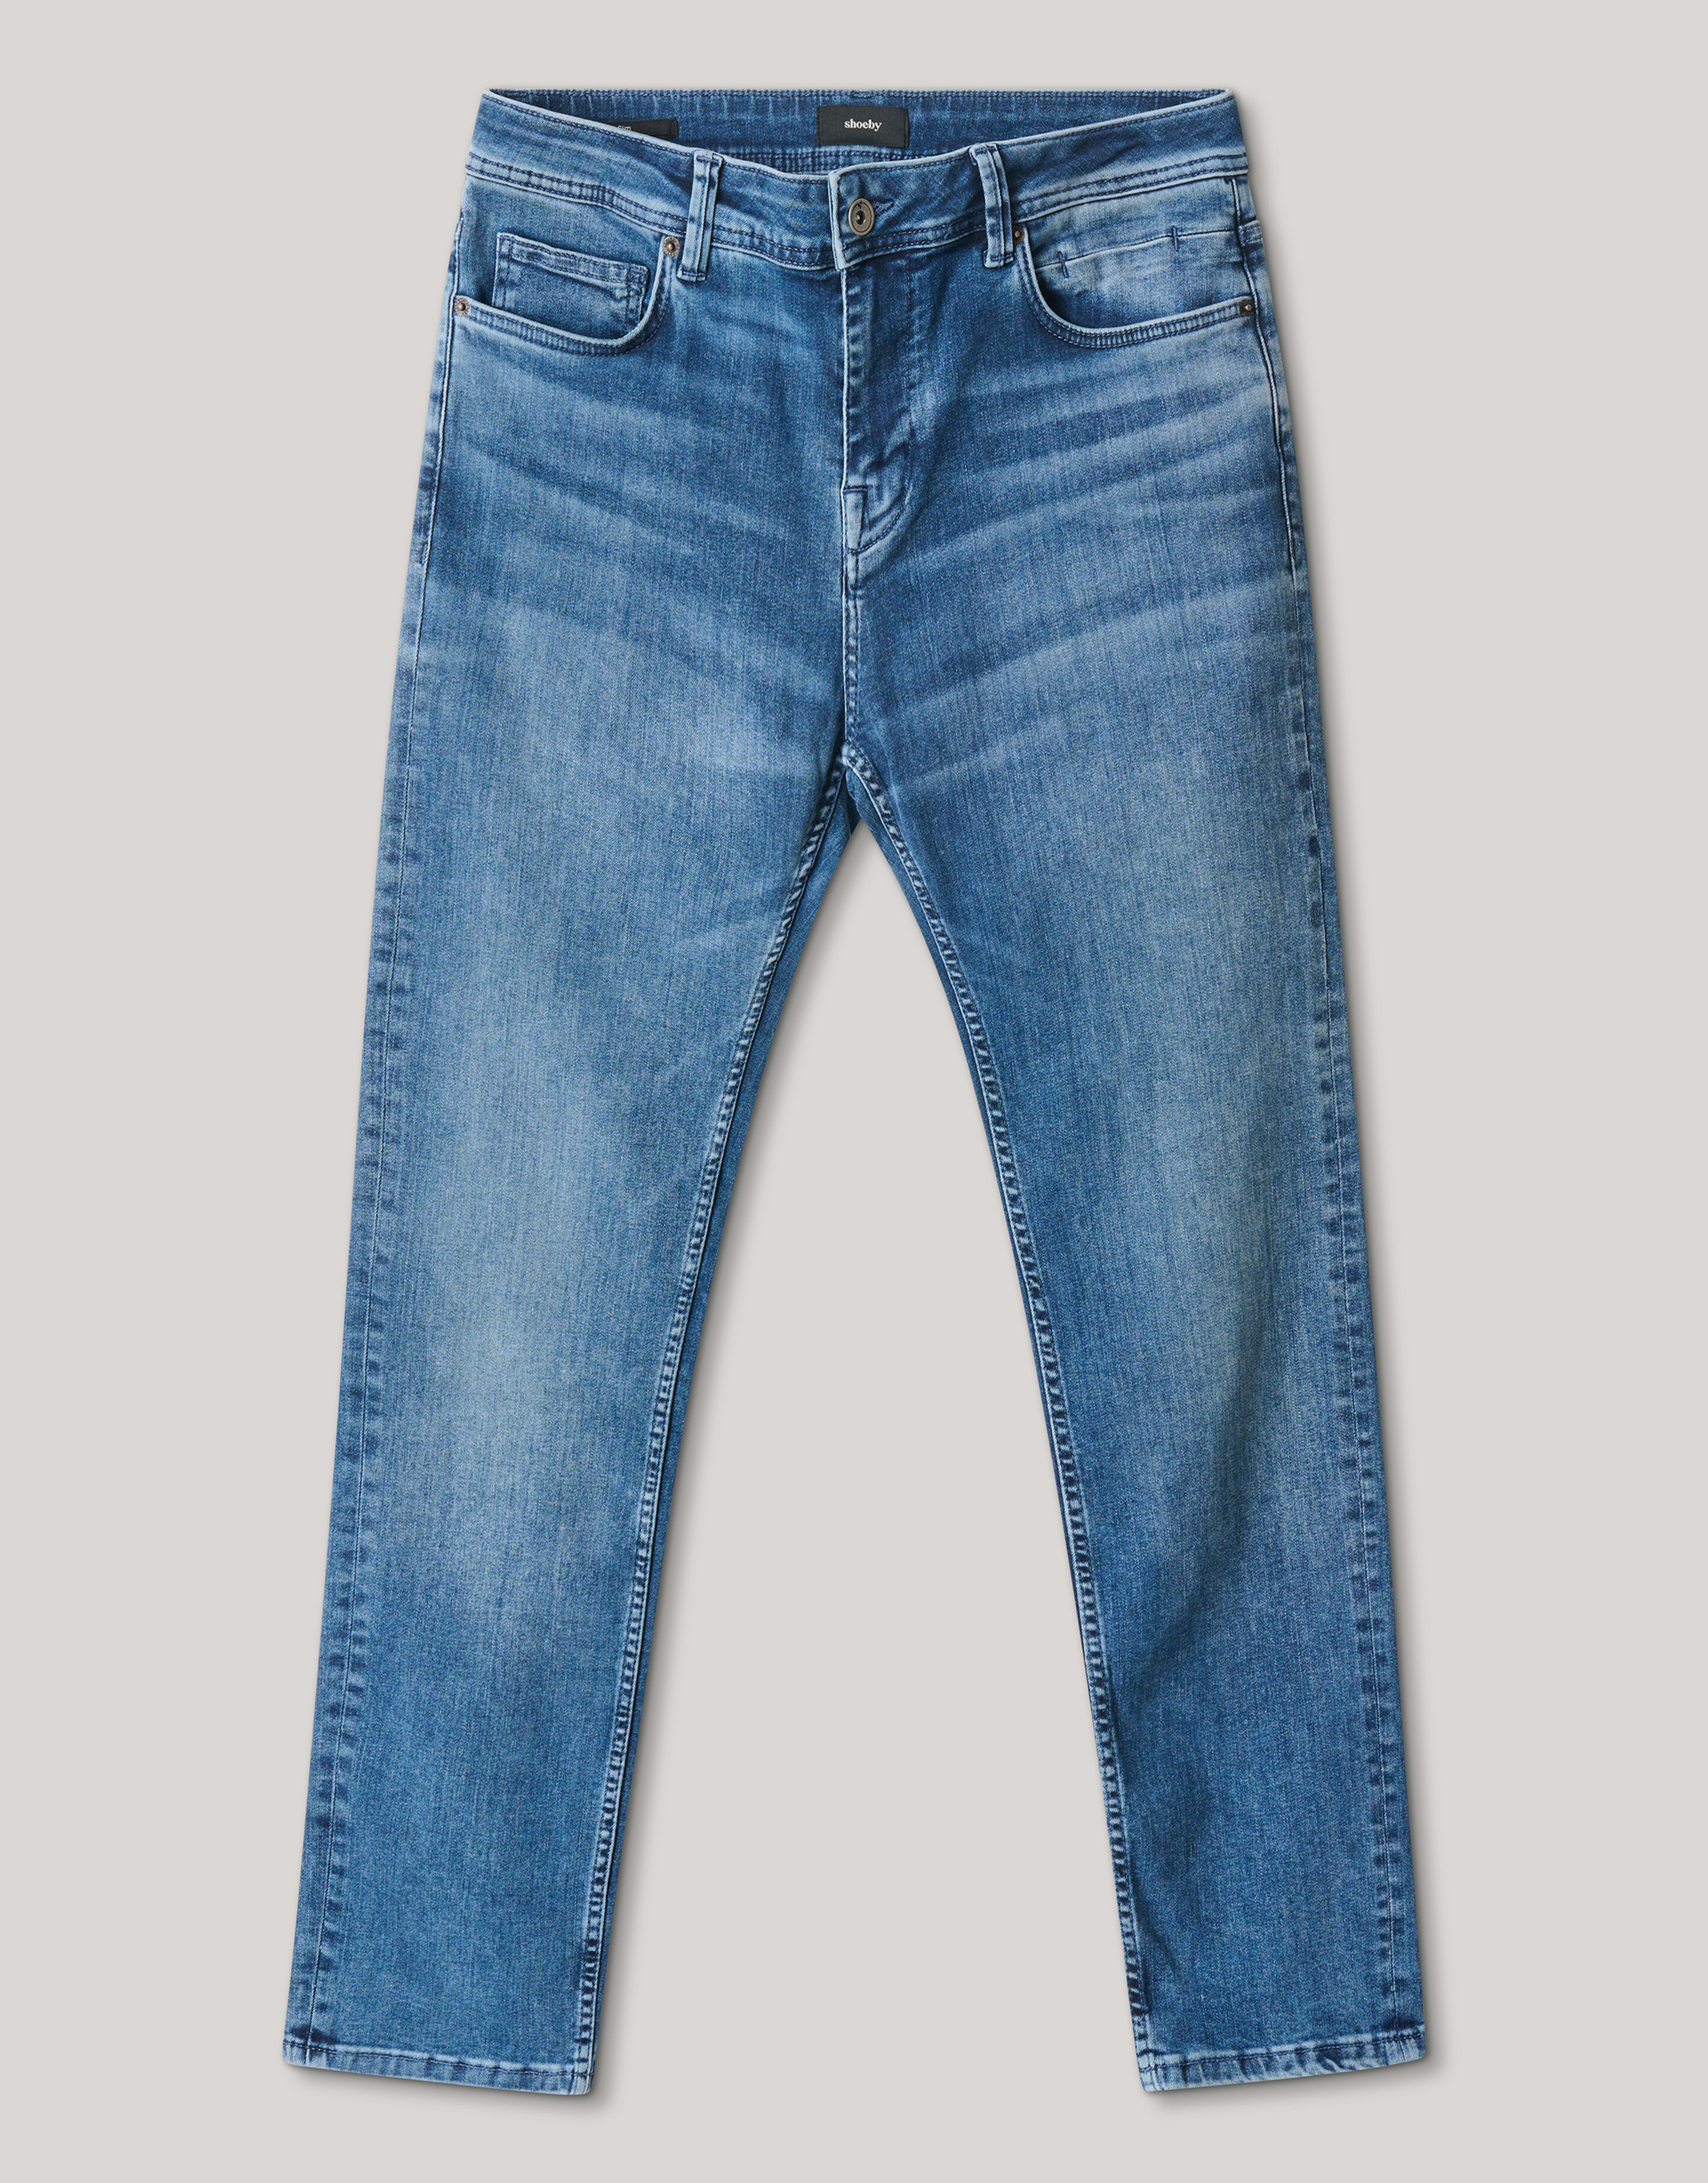 Slim Jeans Blau Länge 32 Refill